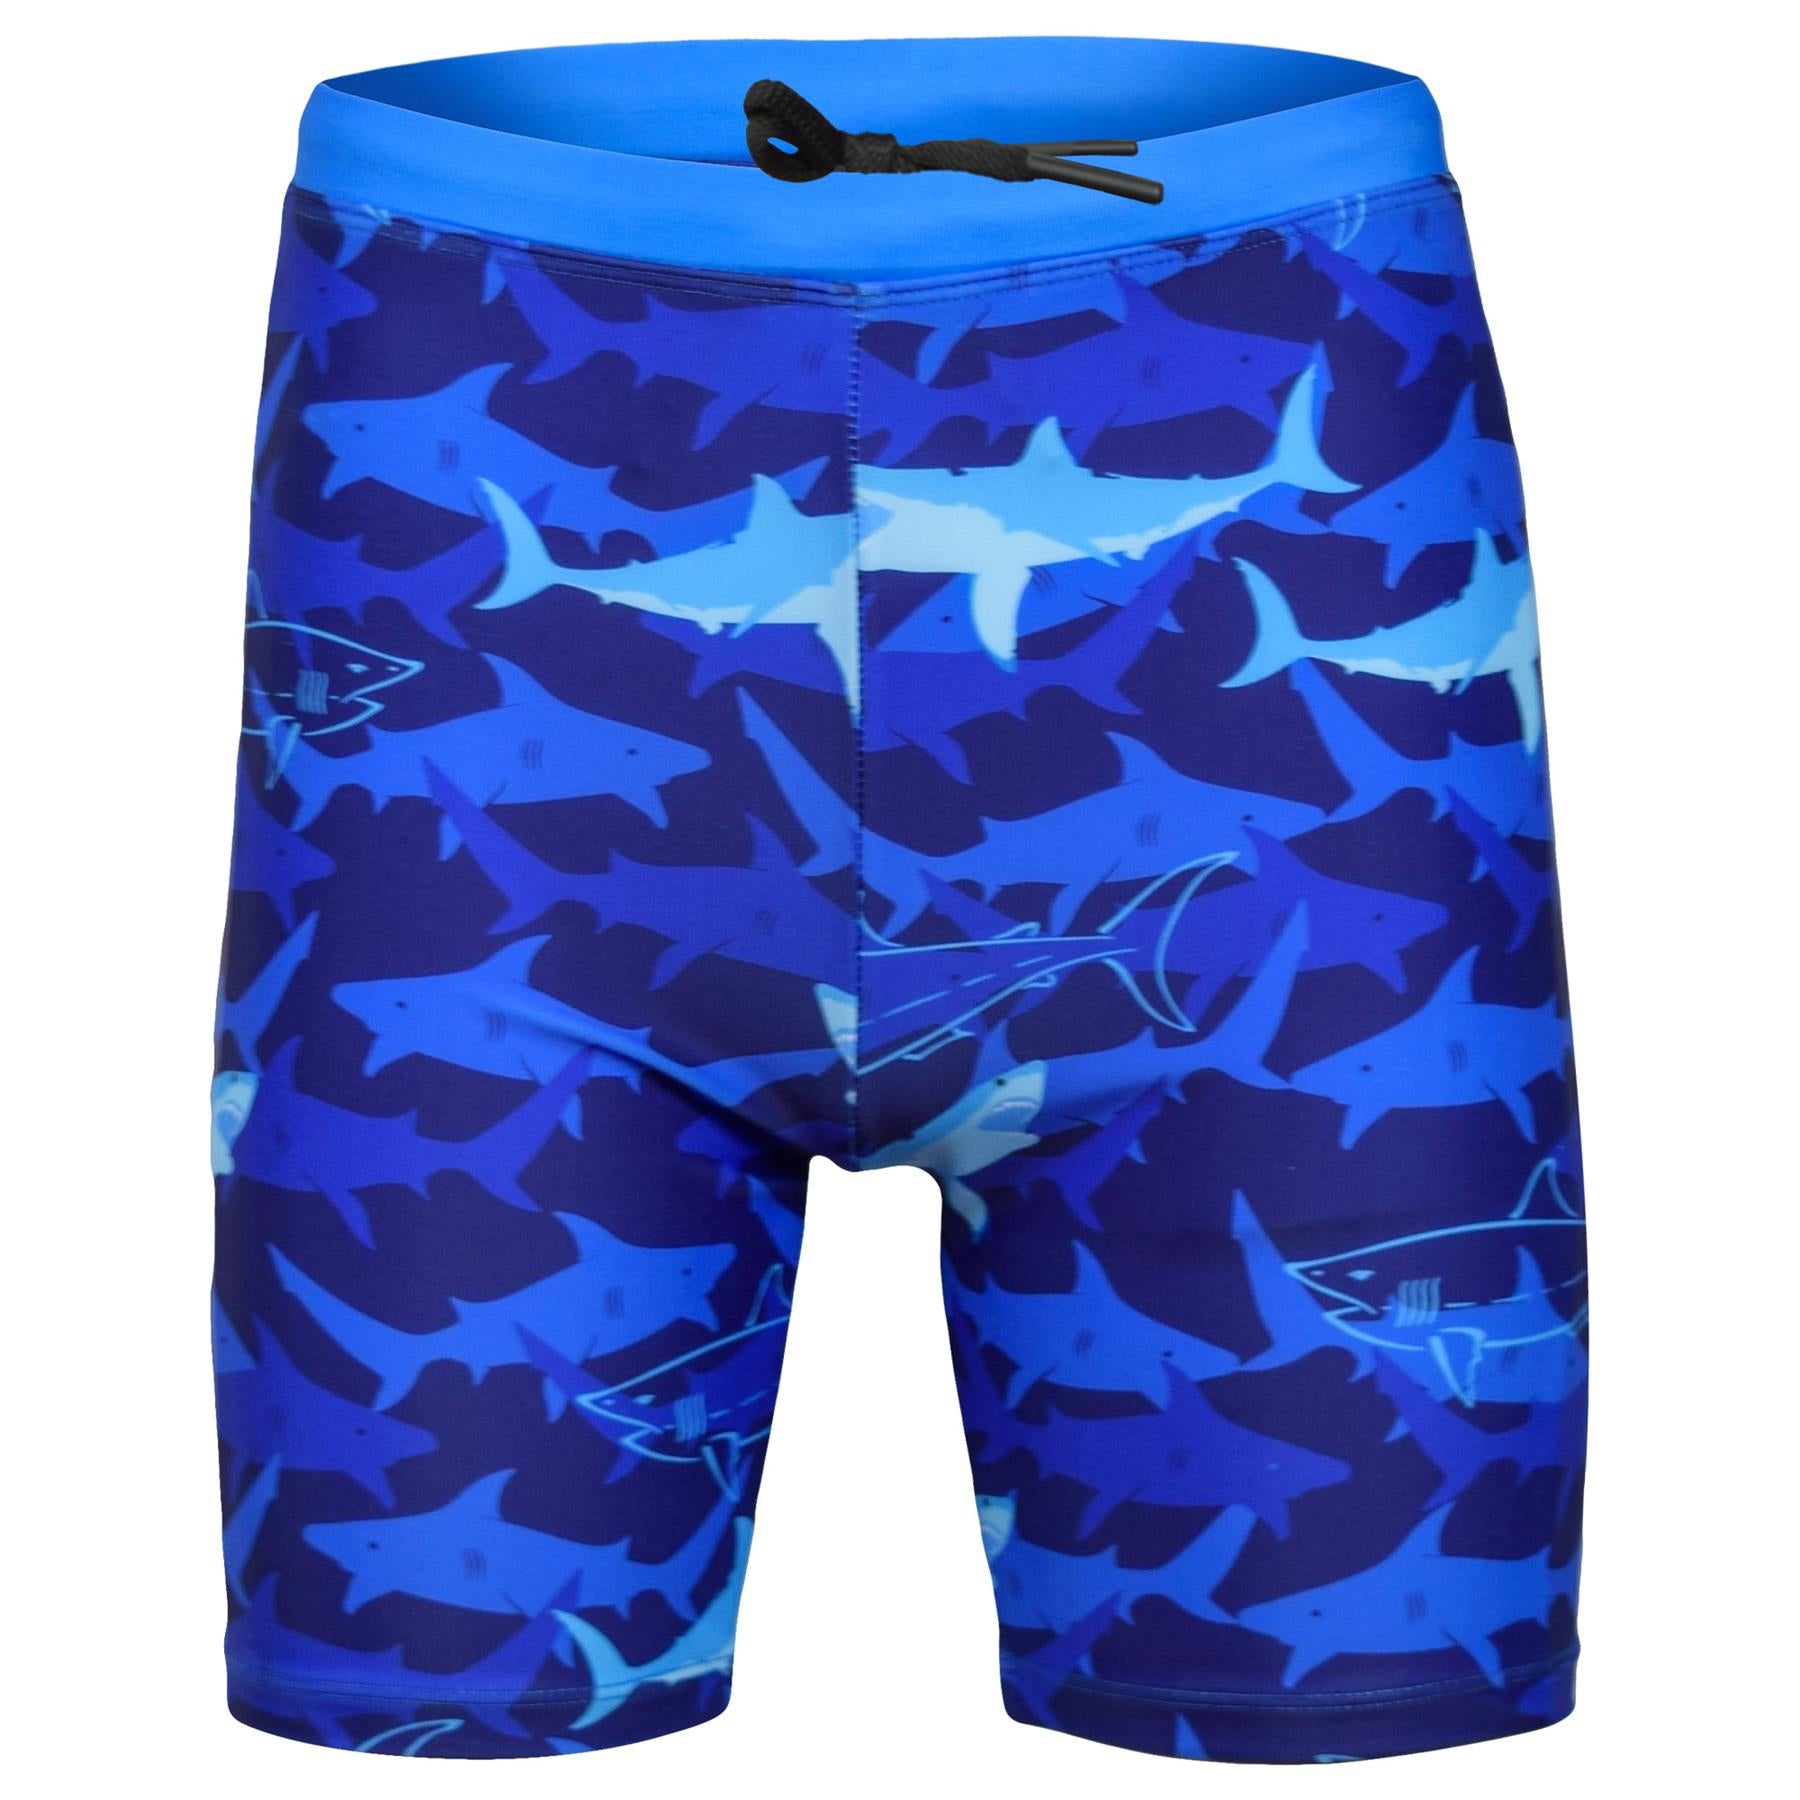 A2Z 4 Kids Boys Beach Swim Shorts Trunks Quick Dry Swimwear Swimming Boardshorts